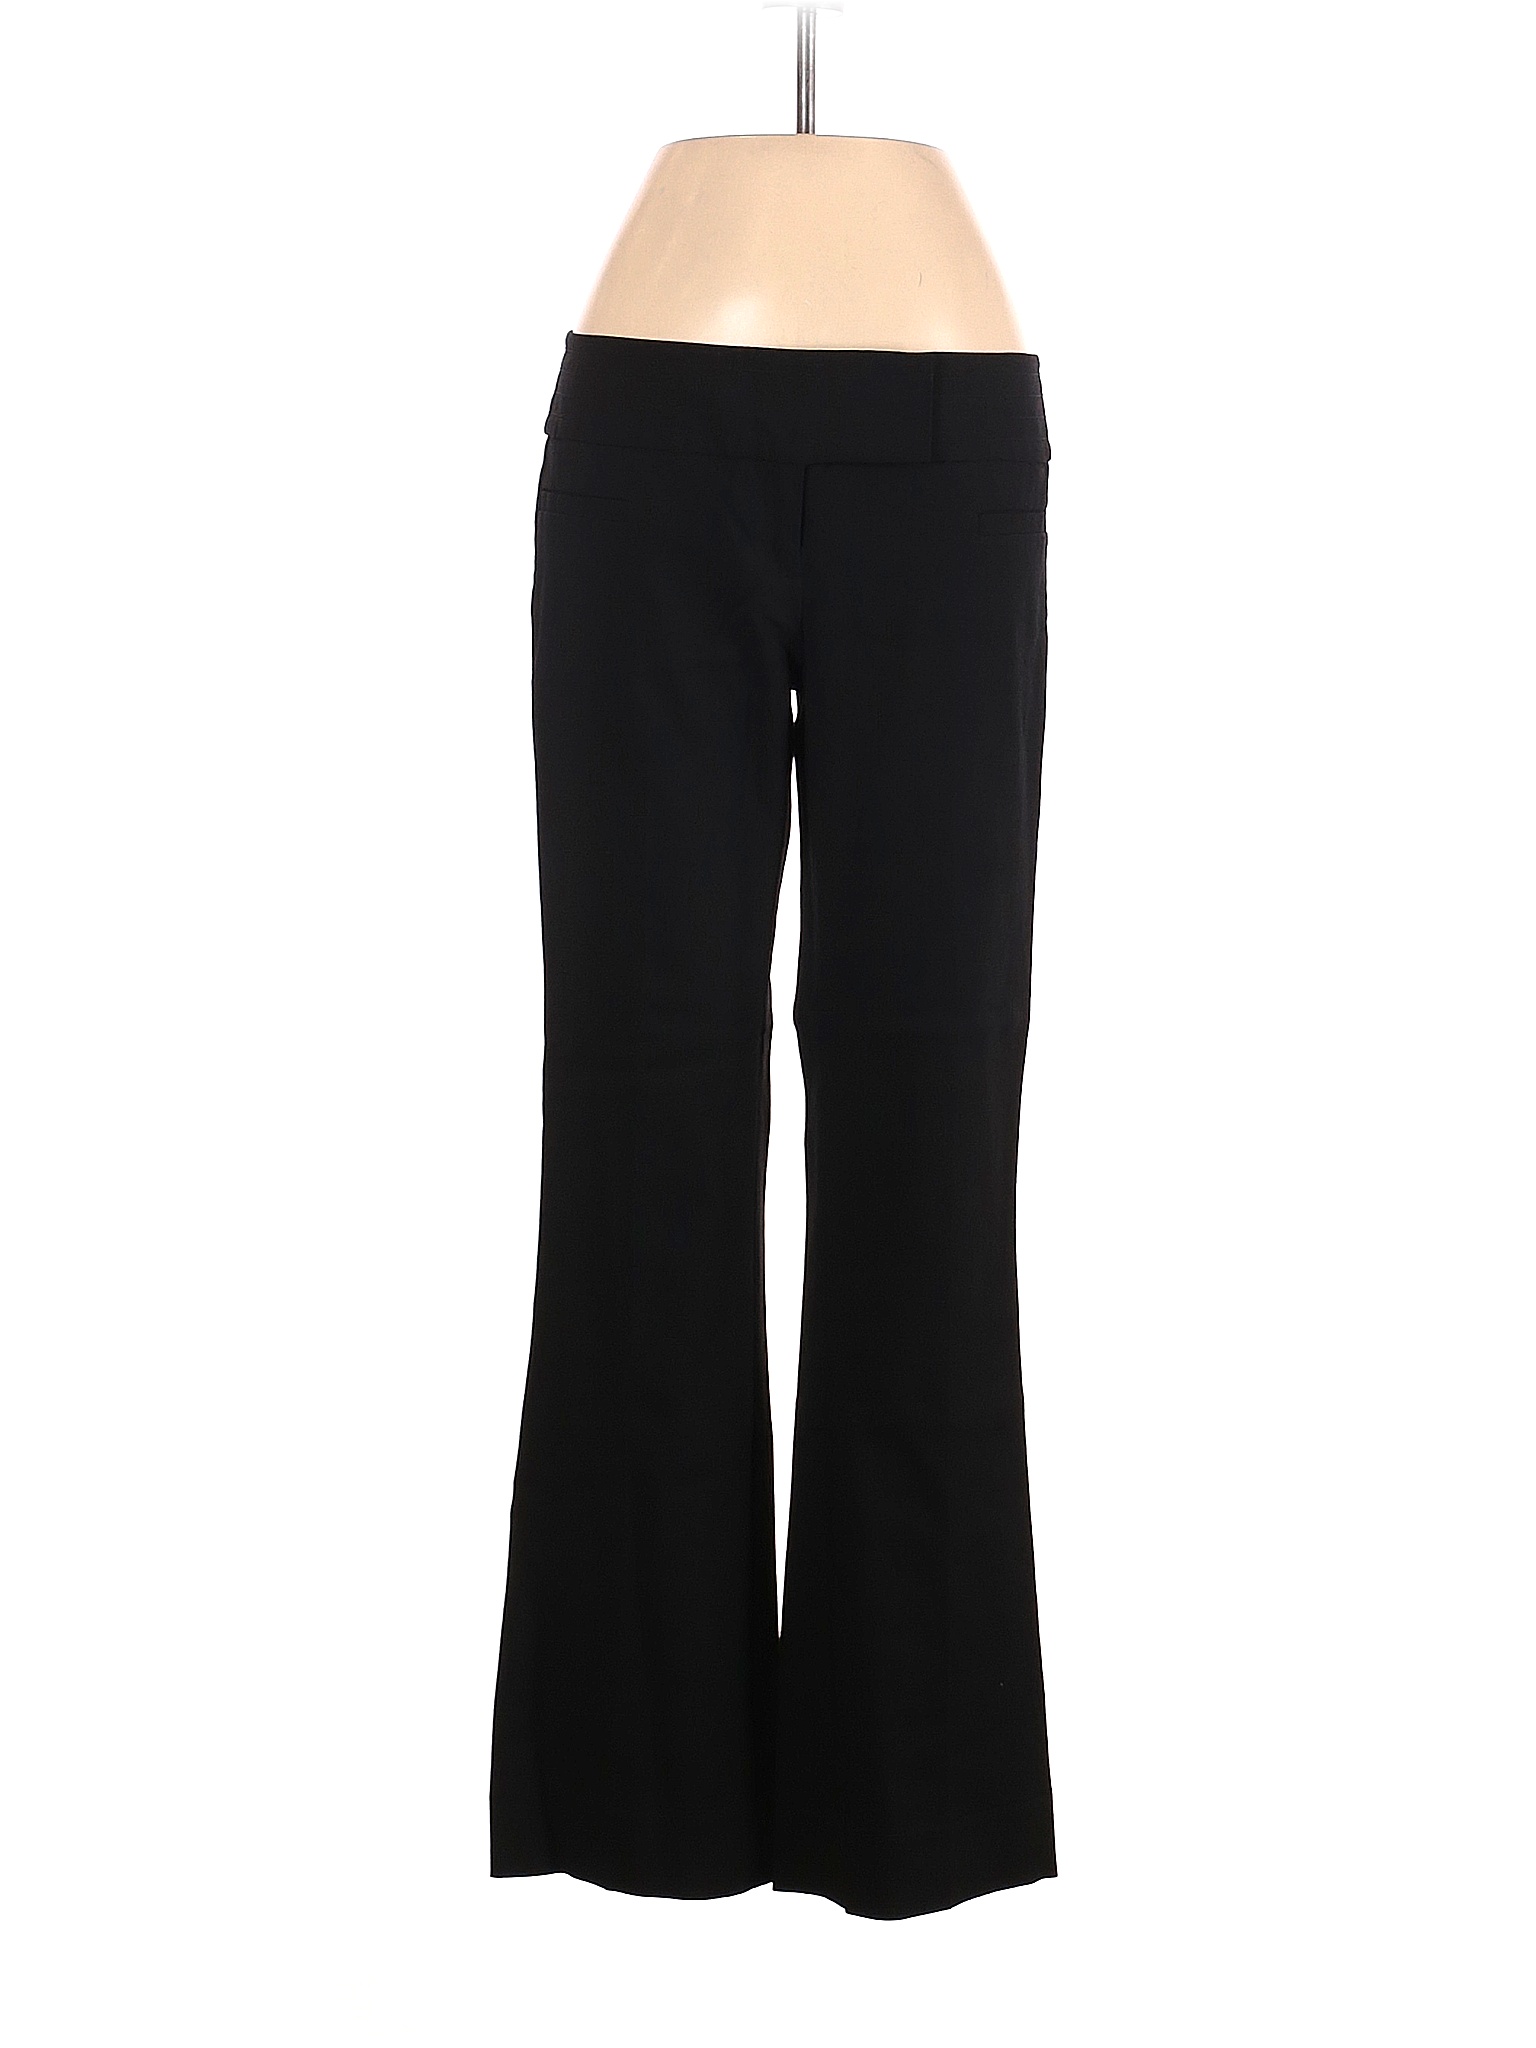 The Limited Black Dress Pants Size 2 - 91% off | thredUP